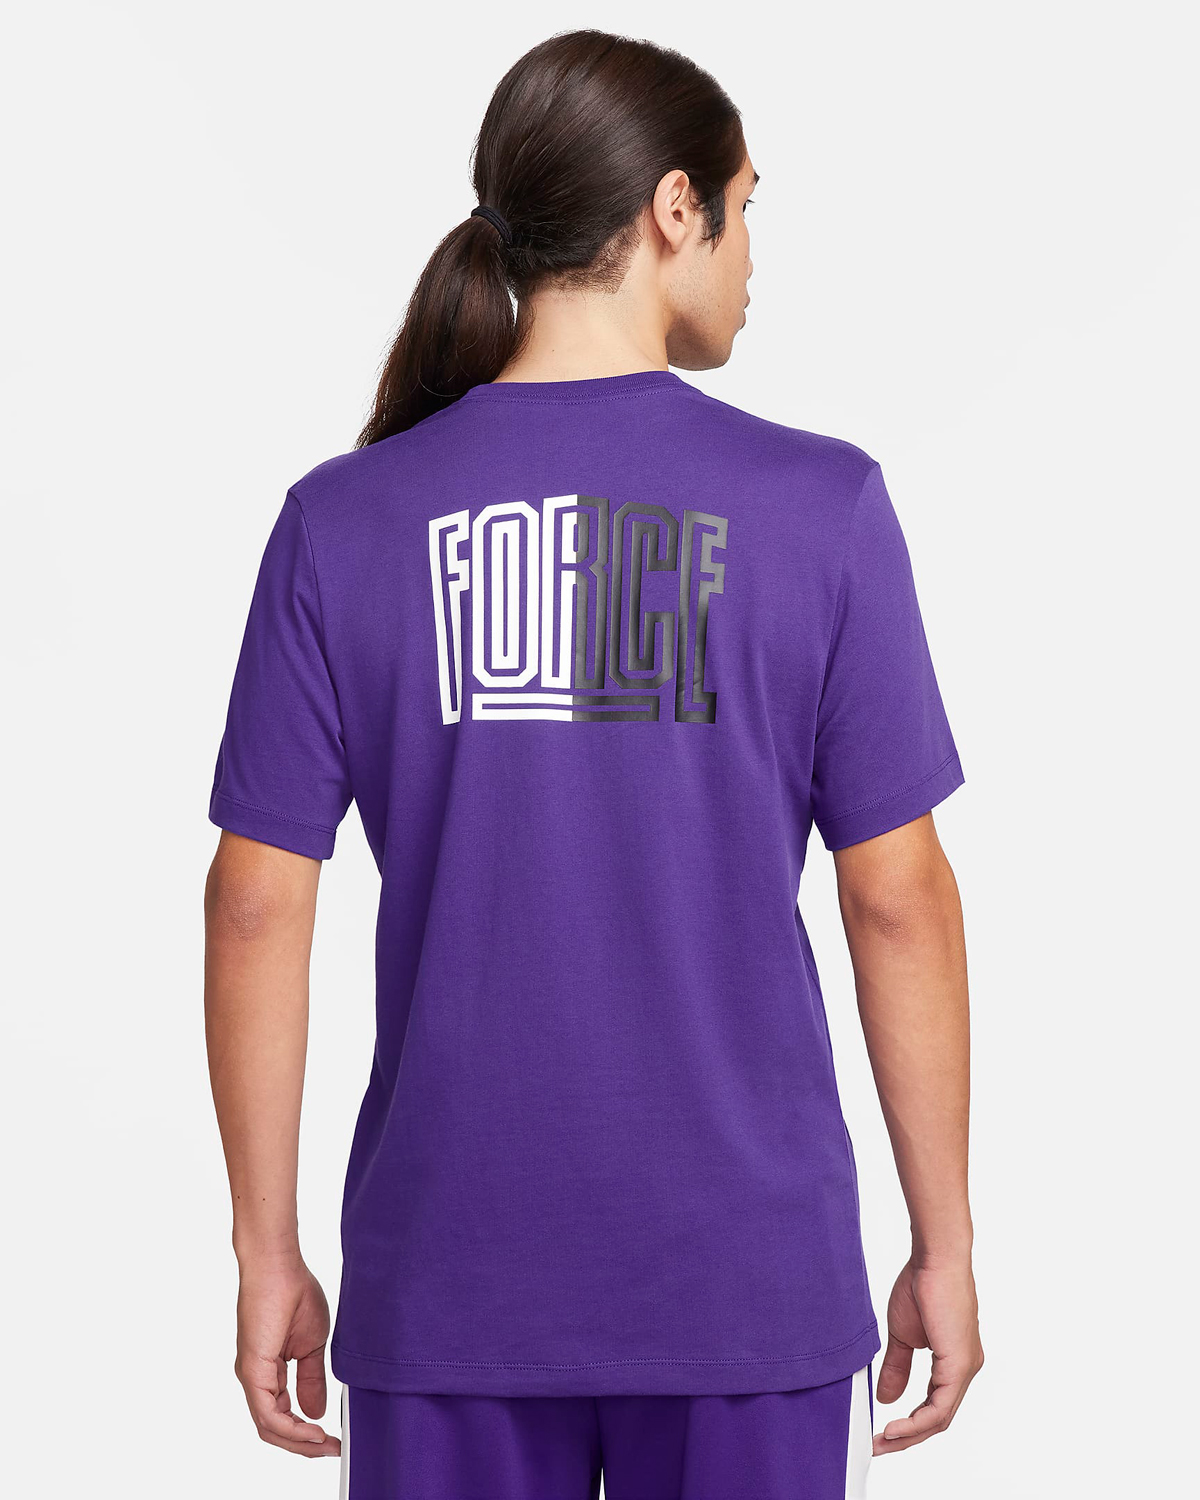 Nike-Starting-5-T-Shirt-Field-Purple-2